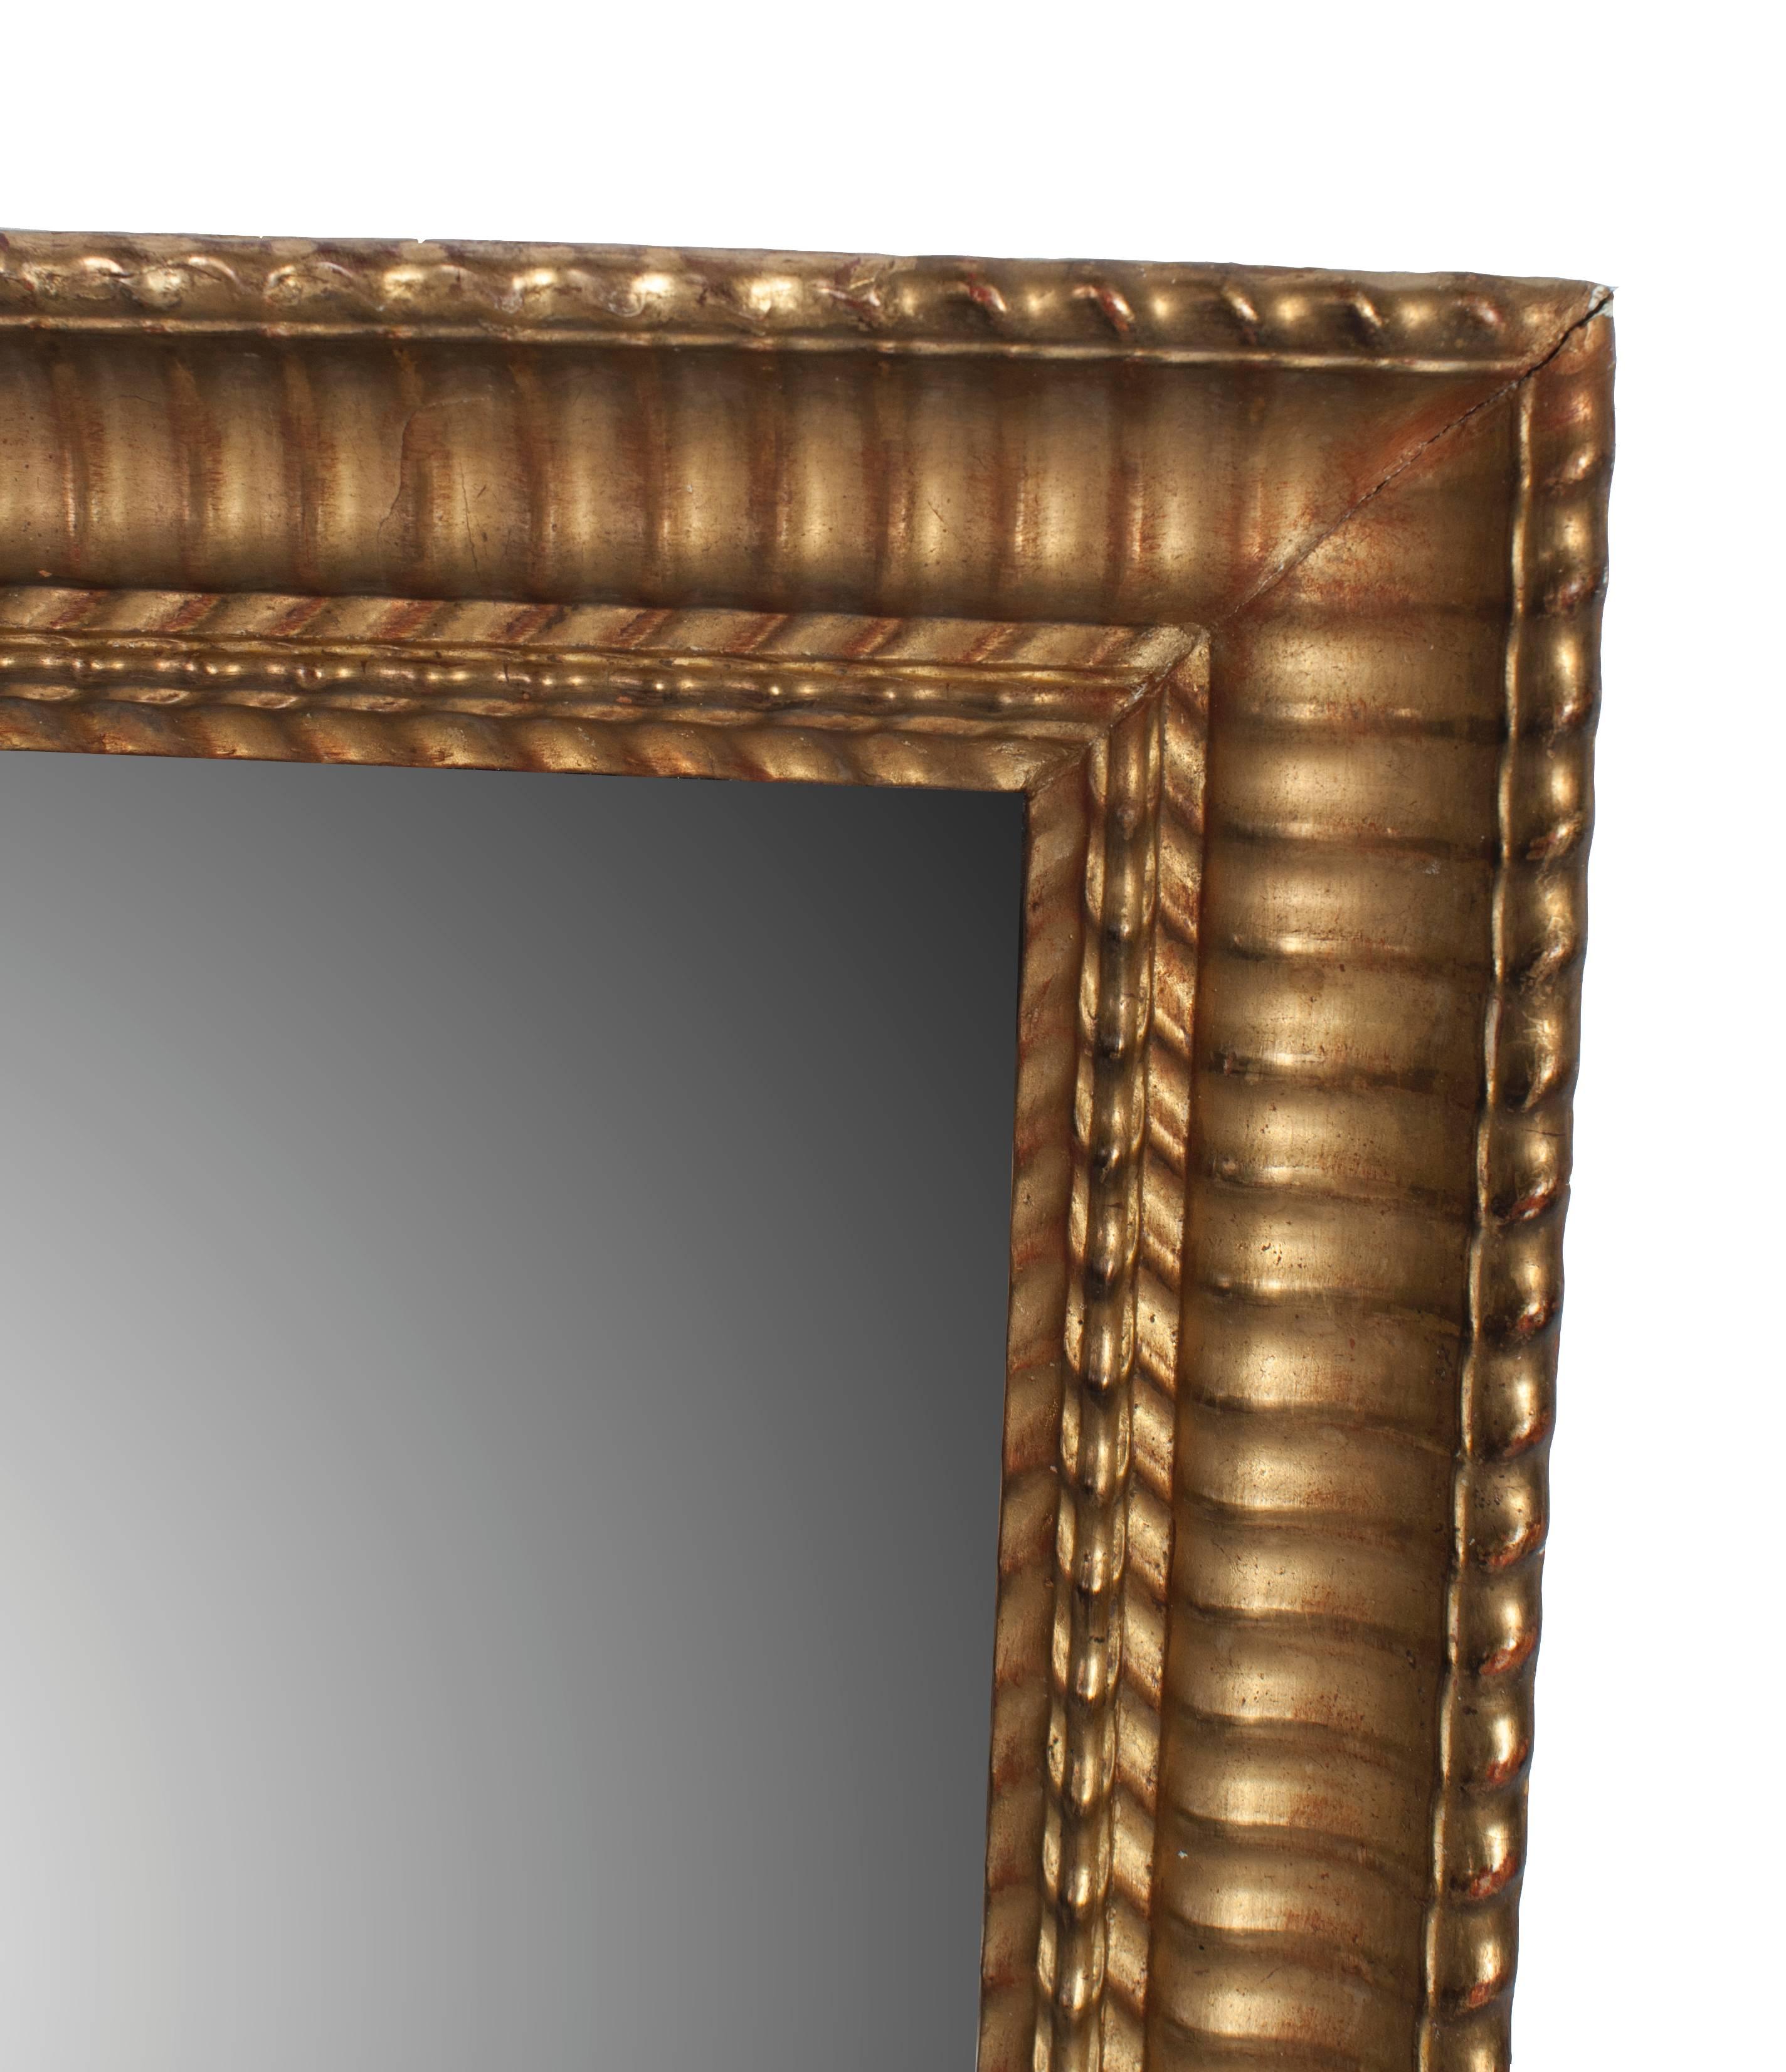 Gilt Napoleon III mirror with small flame stitch pattern trim frame.